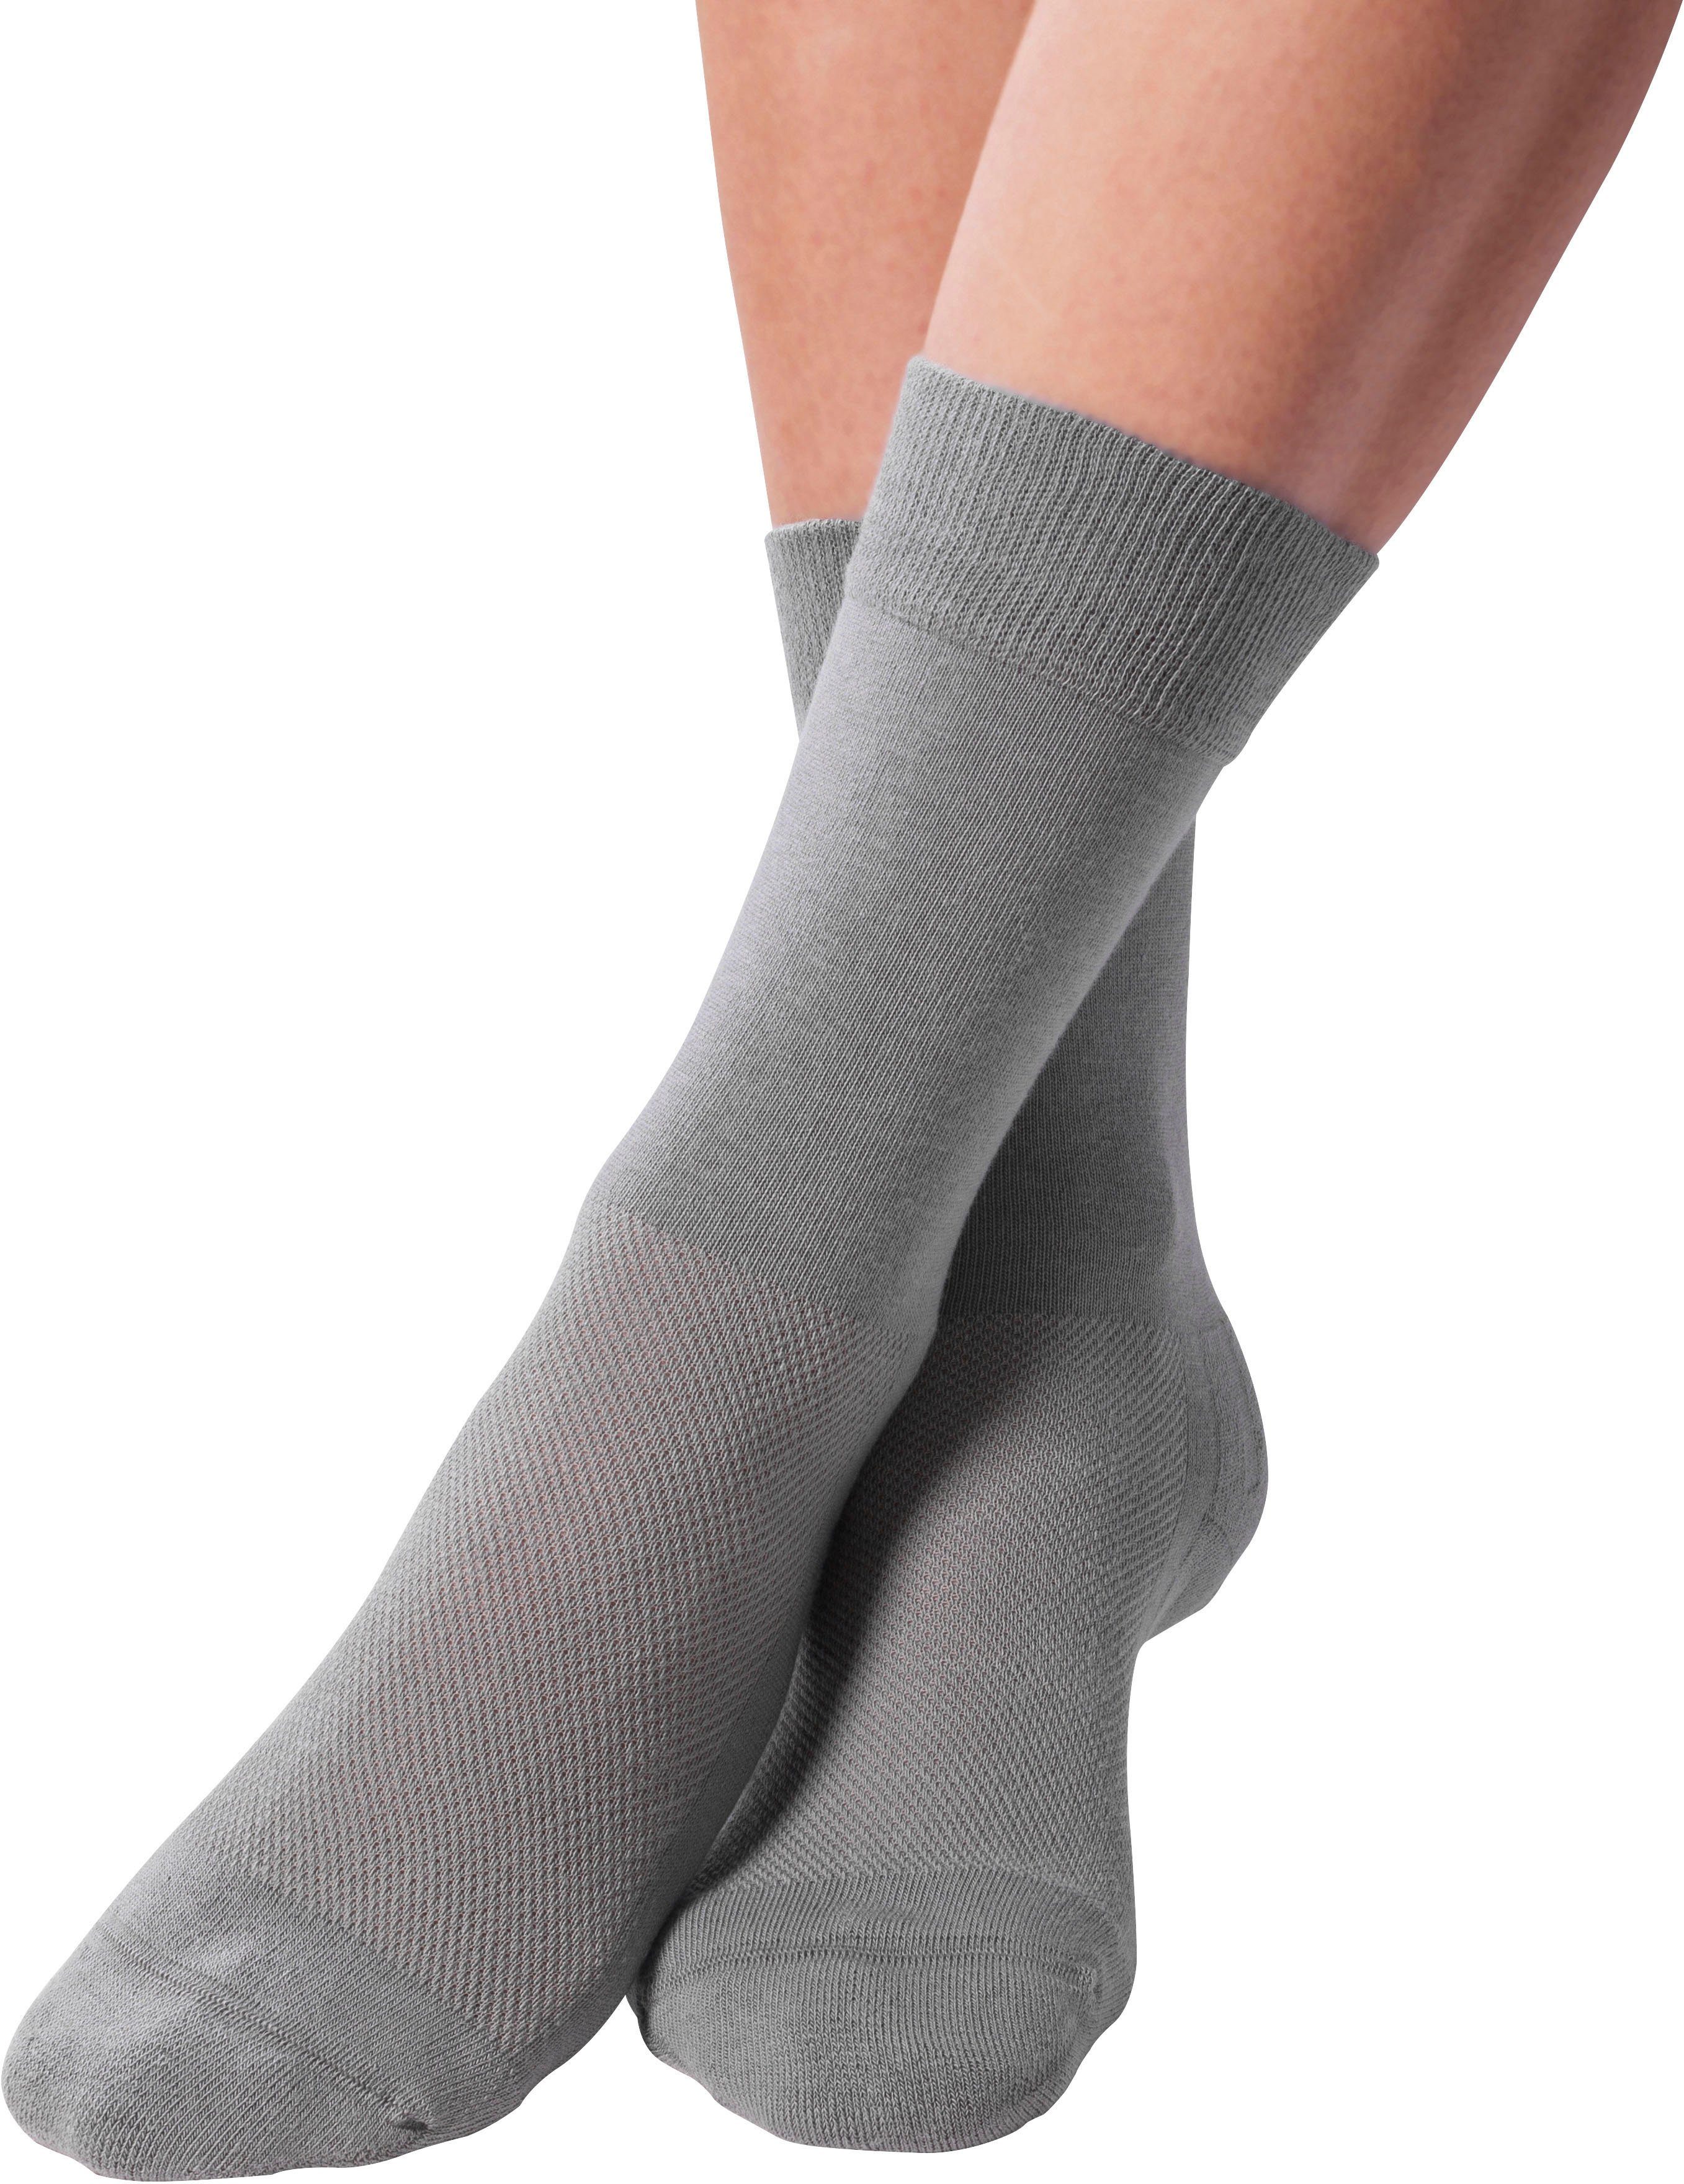 Diabetikersocken Socken grau Venenfeund Fußgut (2-Paar) Sensitiv